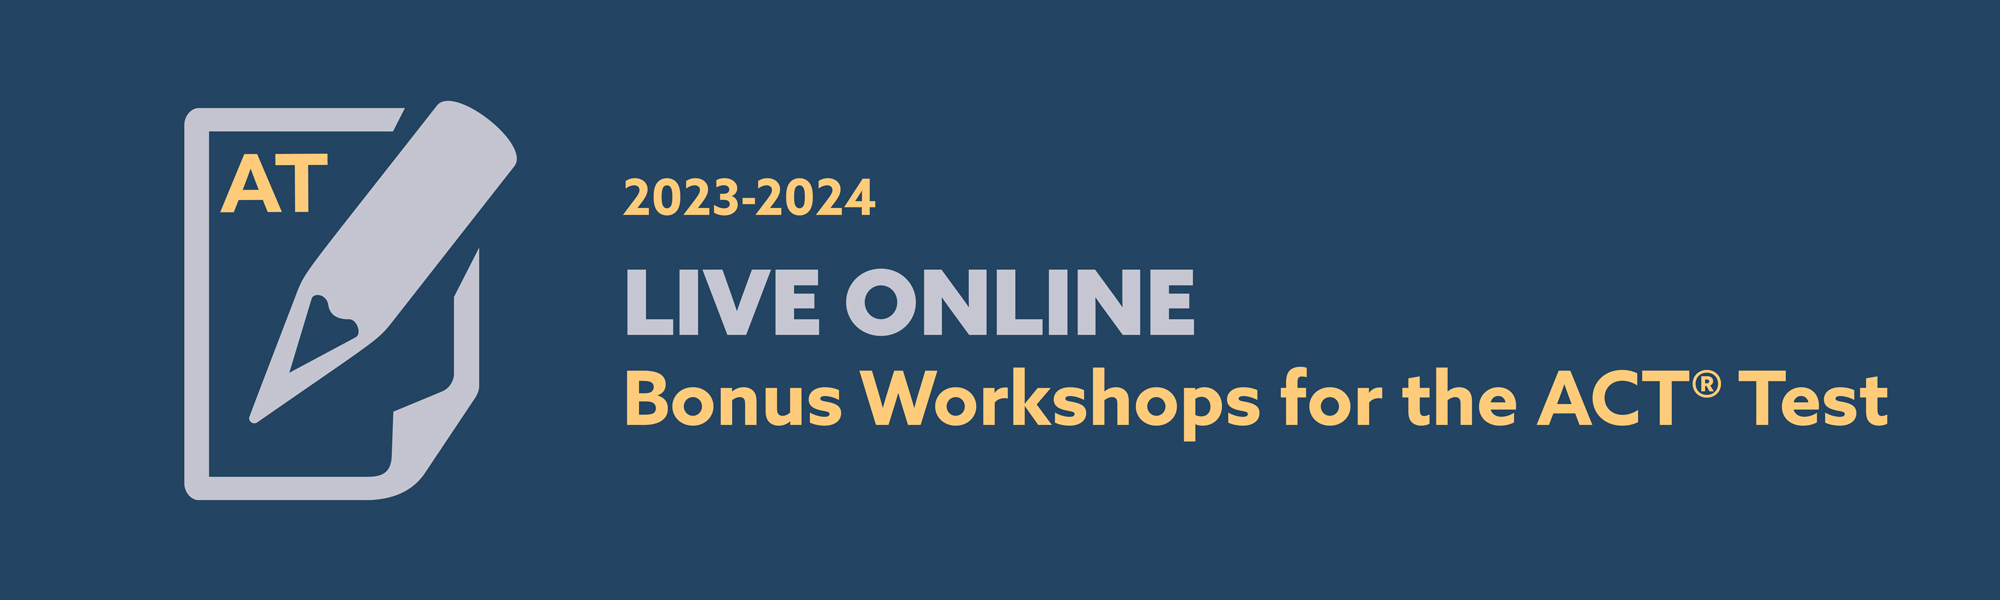 Bonus Workshops for the ACT® Test – Live Online 2023-2024